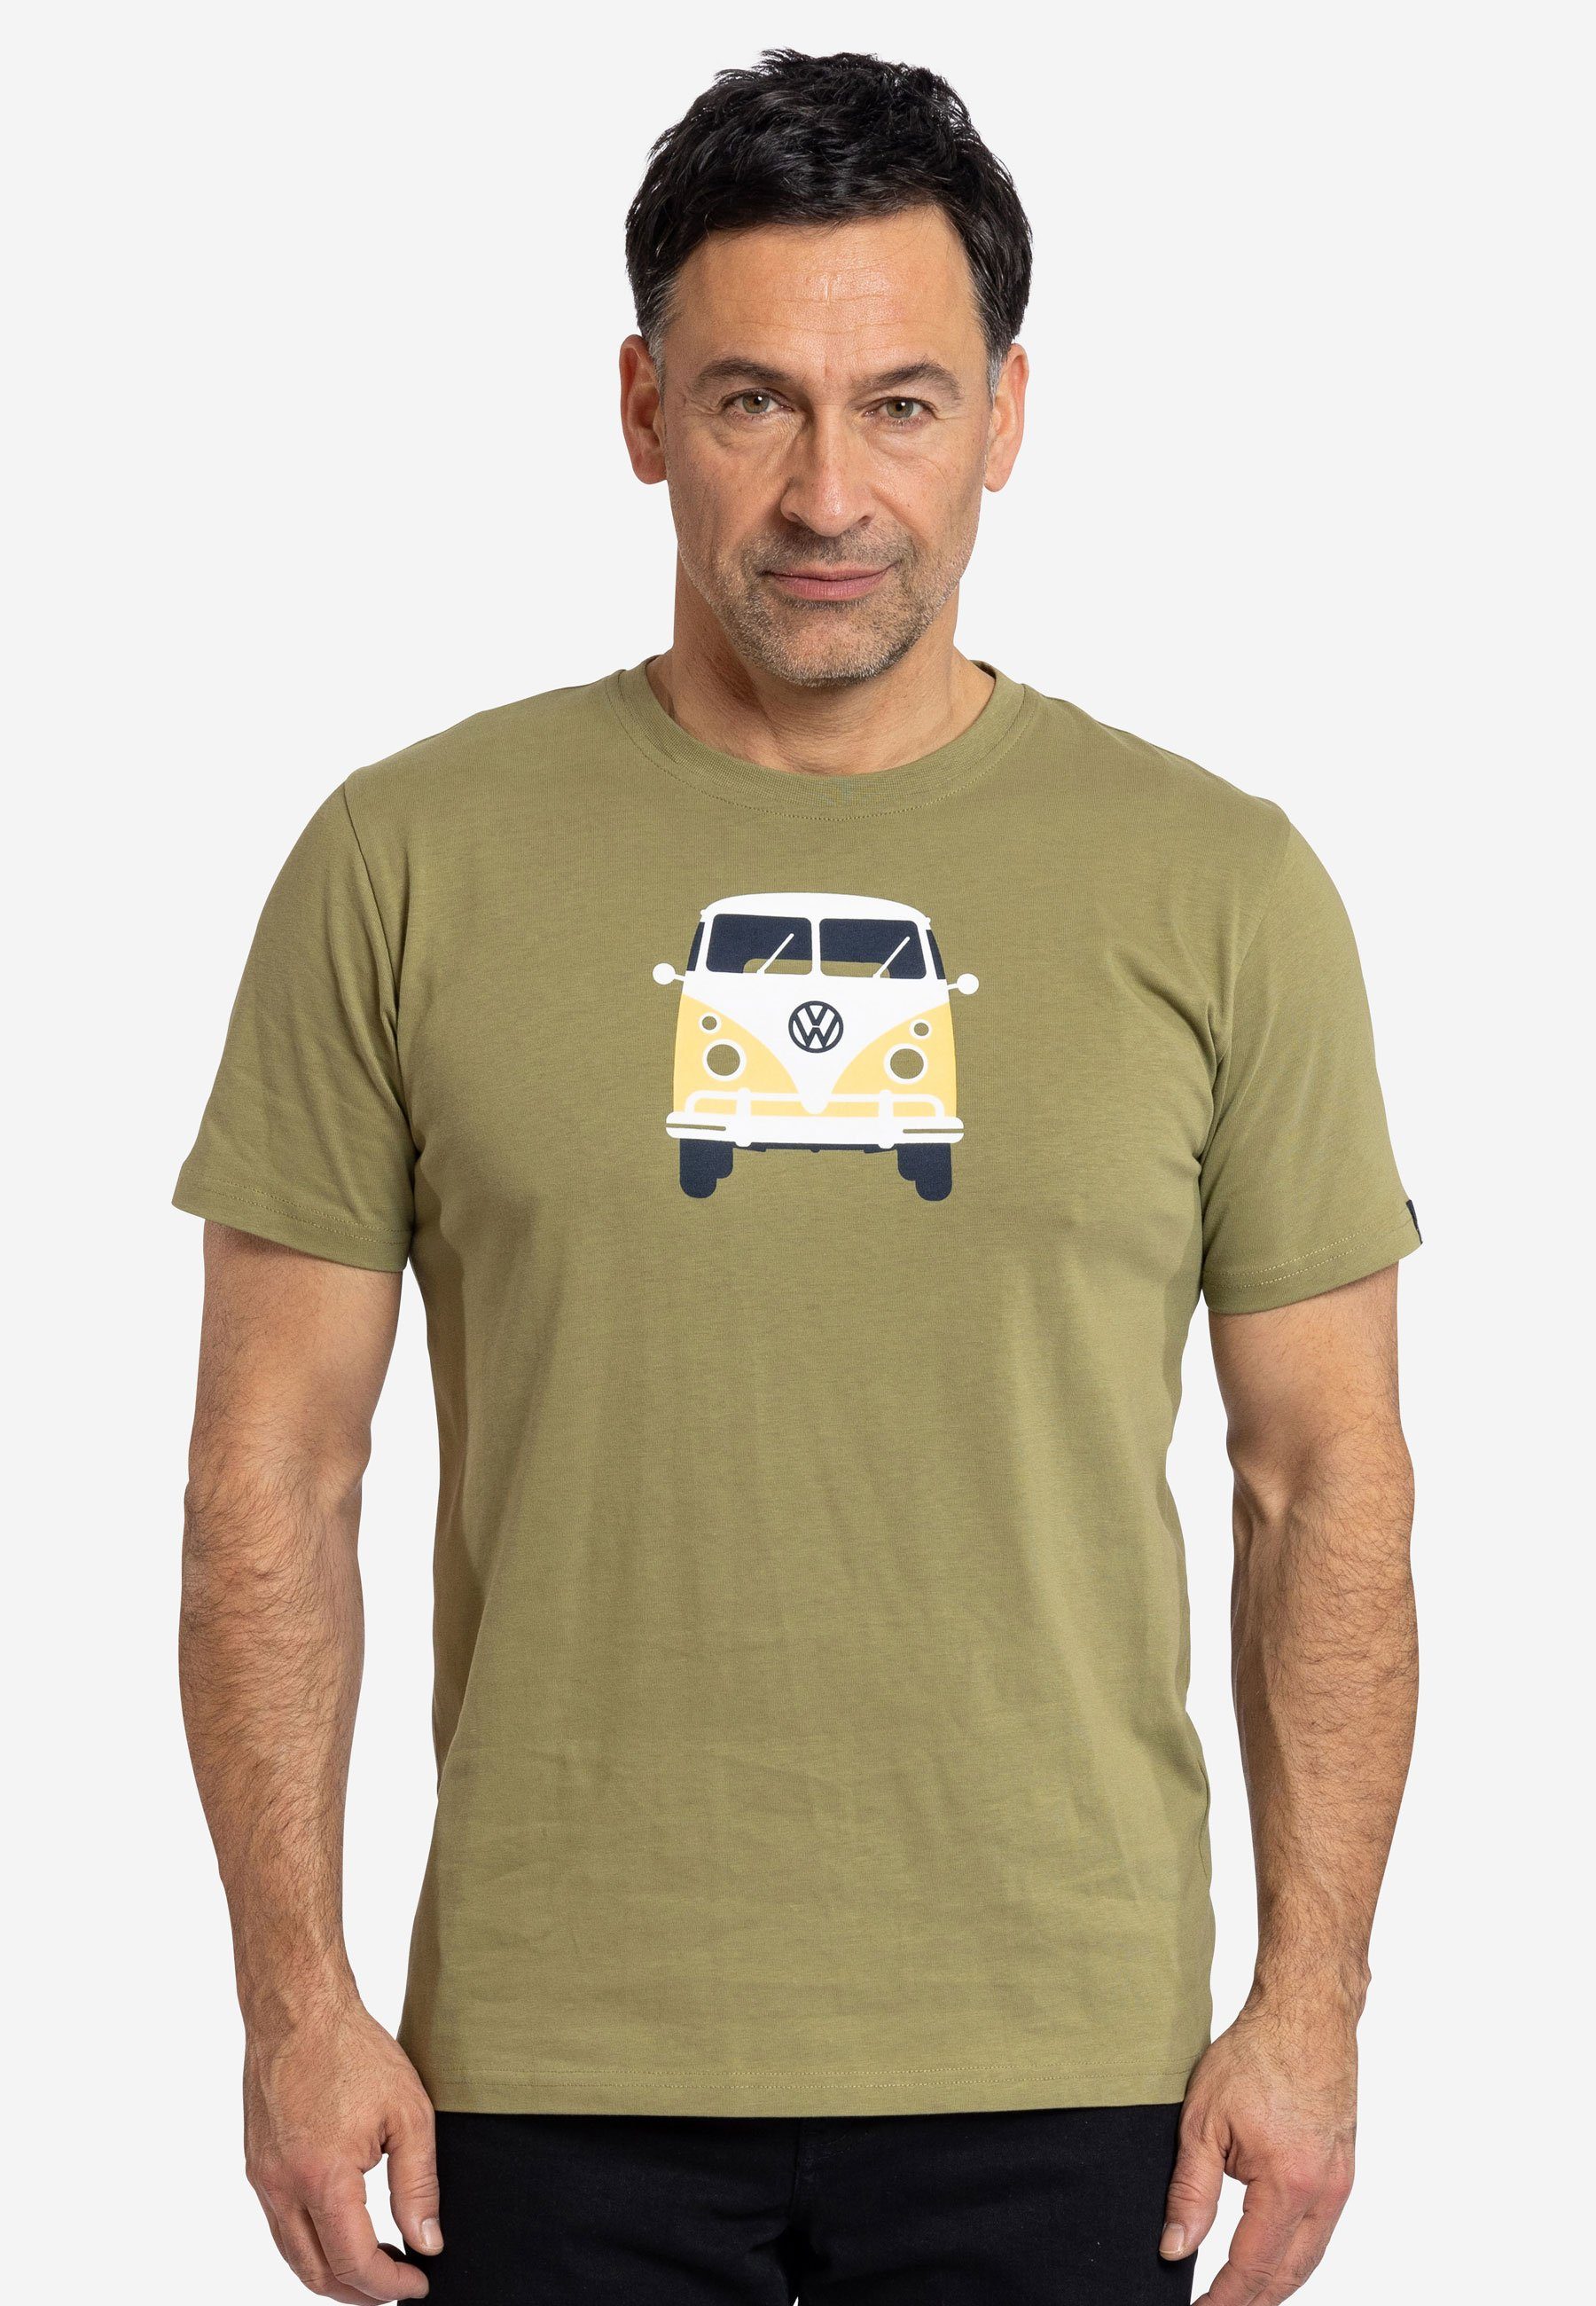 Methusalem Print Brust avocado lizenzierter Elkline Bulli Rücken VW T-Shirt